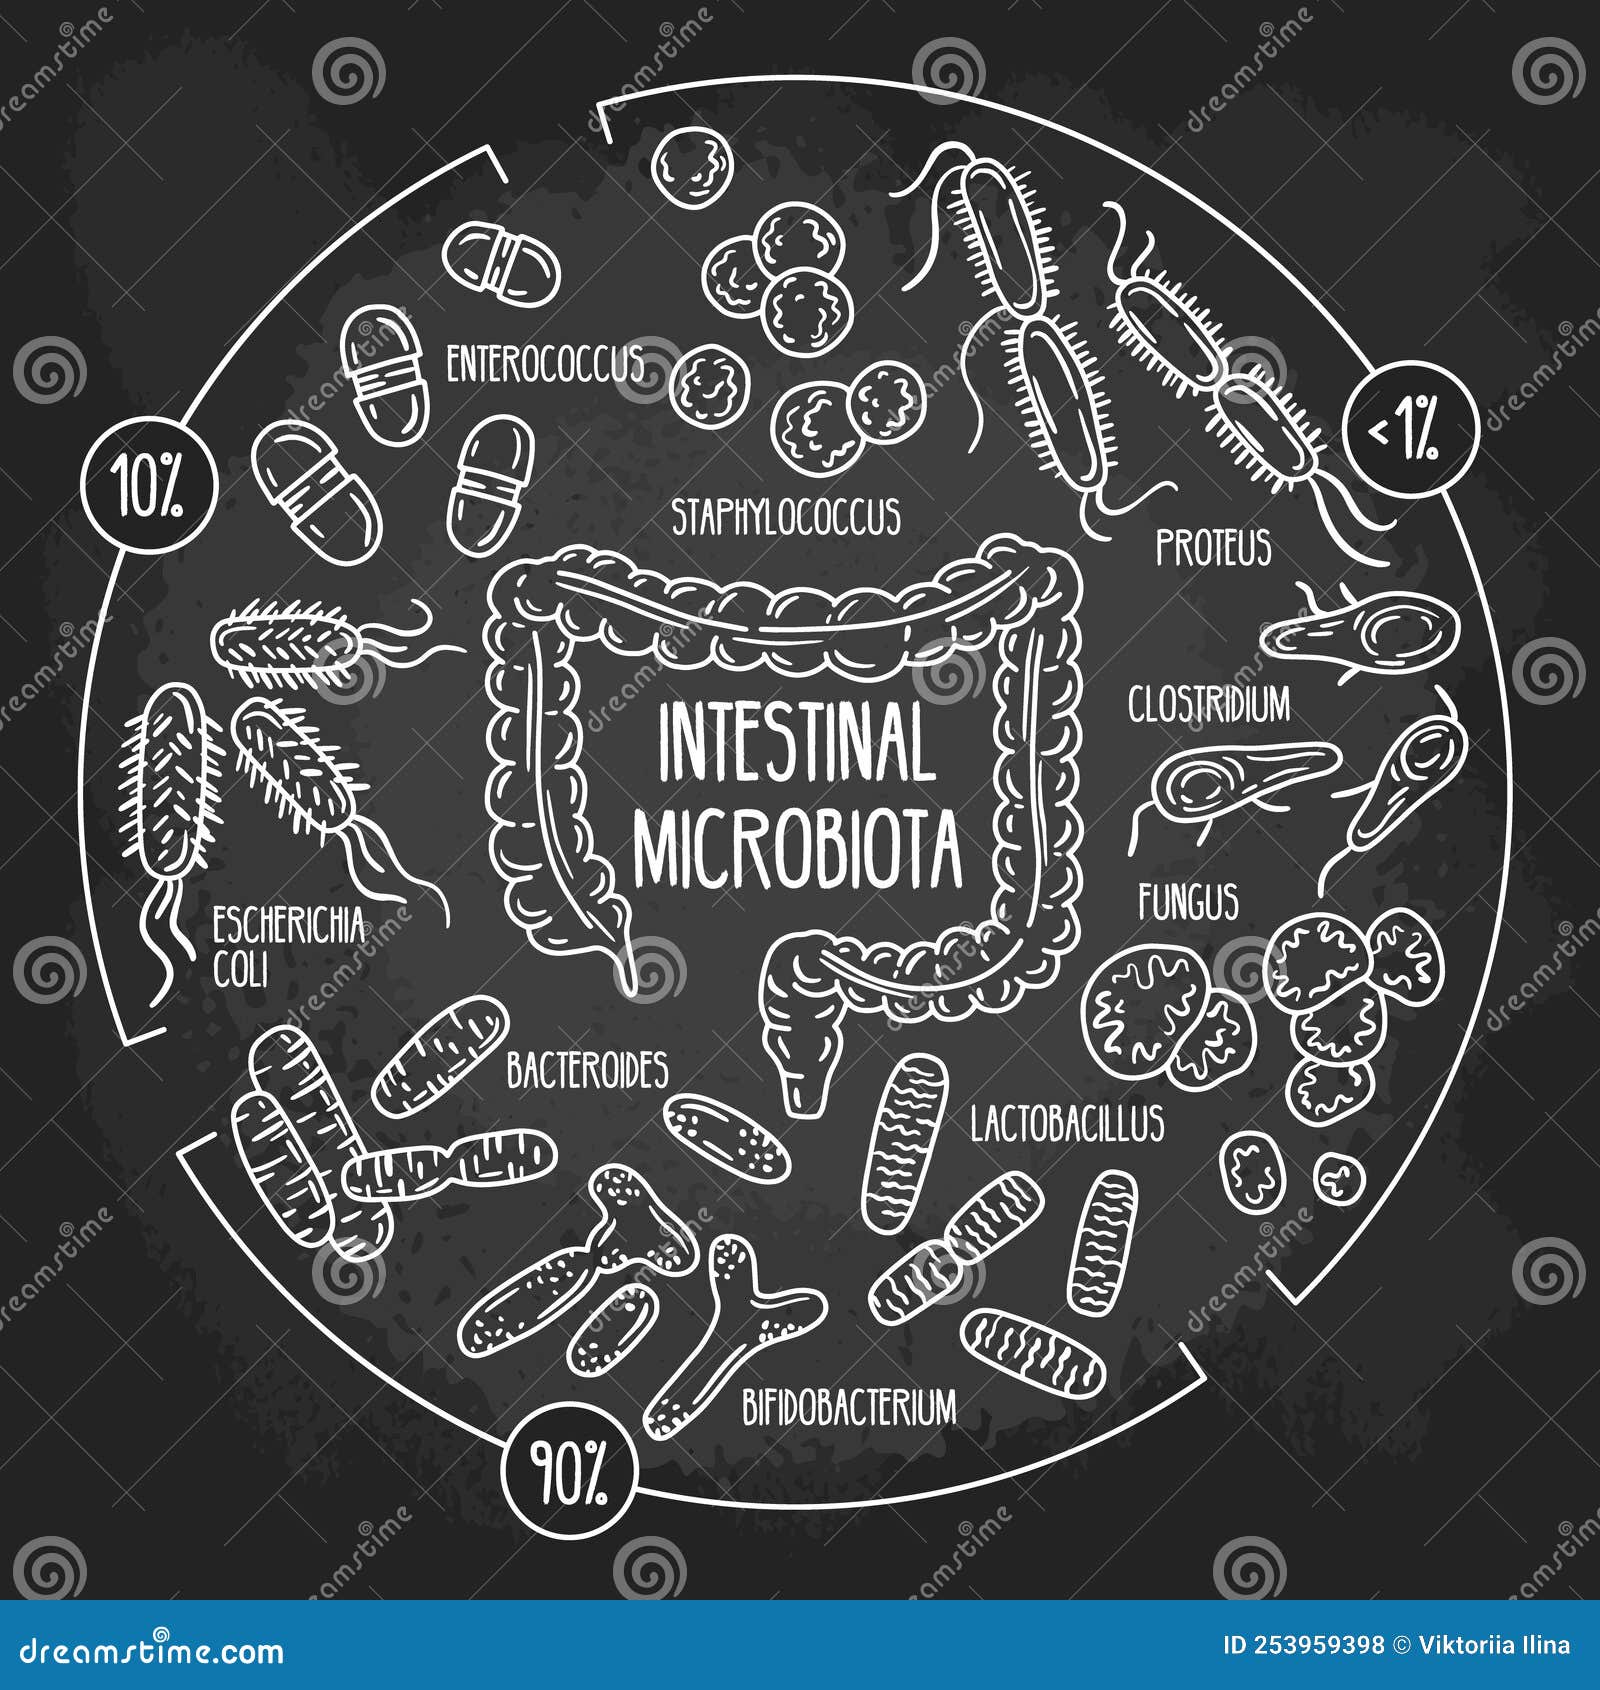  chalk infographics of the human intestinal flora on the blackboard